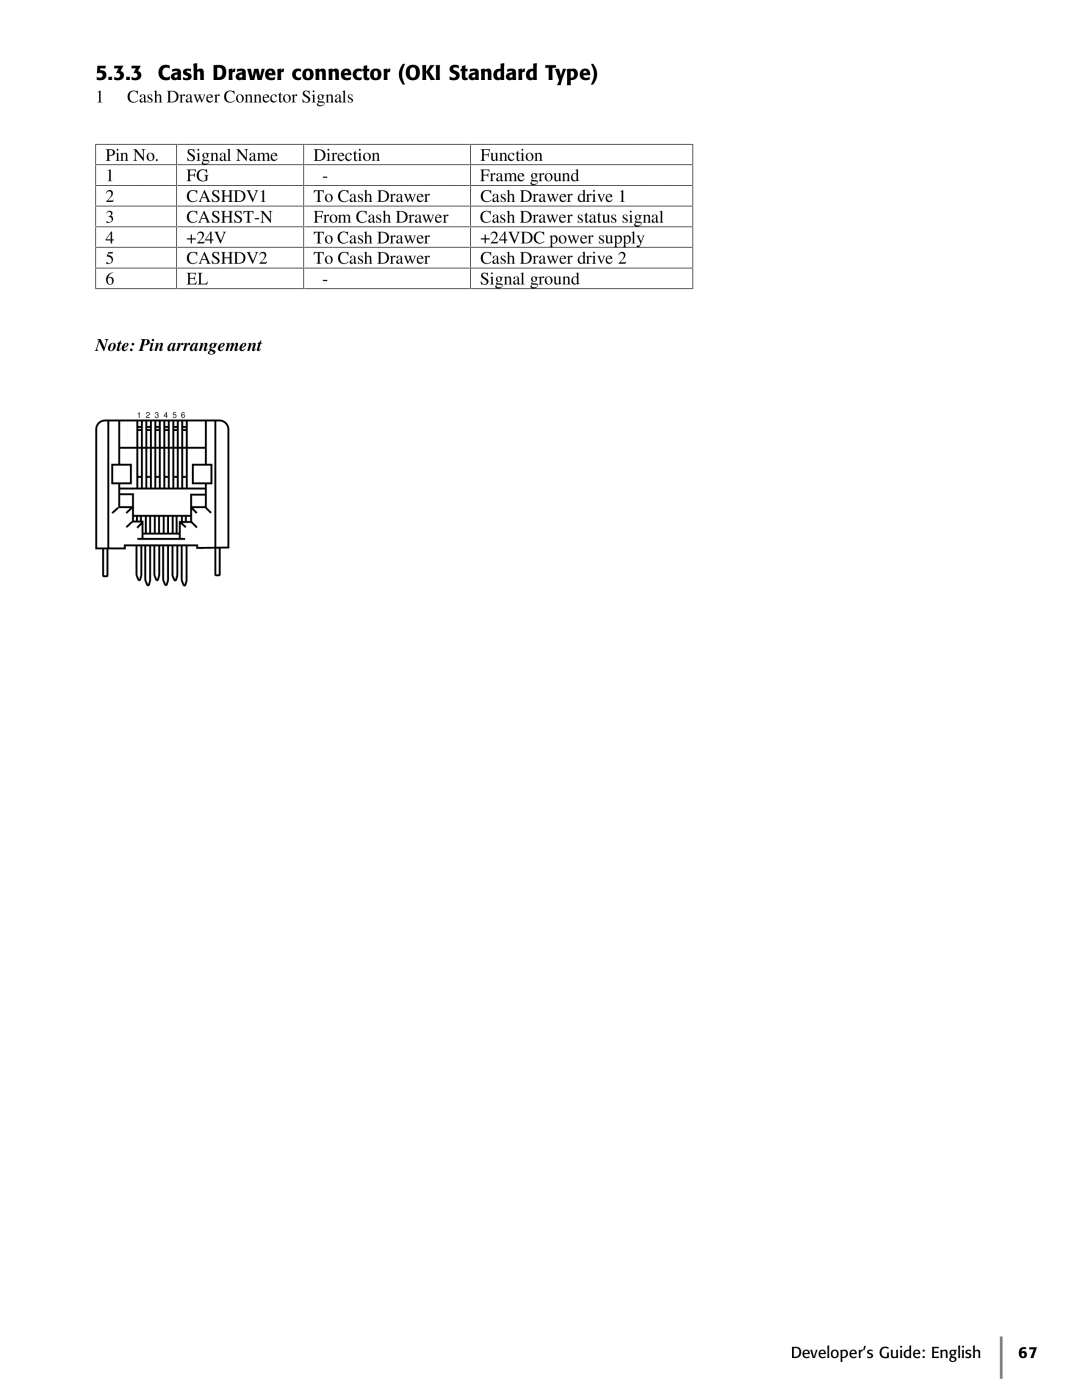 Oki 425D manual Cash Drawer connector OKI Standard Type, Note Pin arrangement, Developer’s Guide English, 1 2 3 4 5 